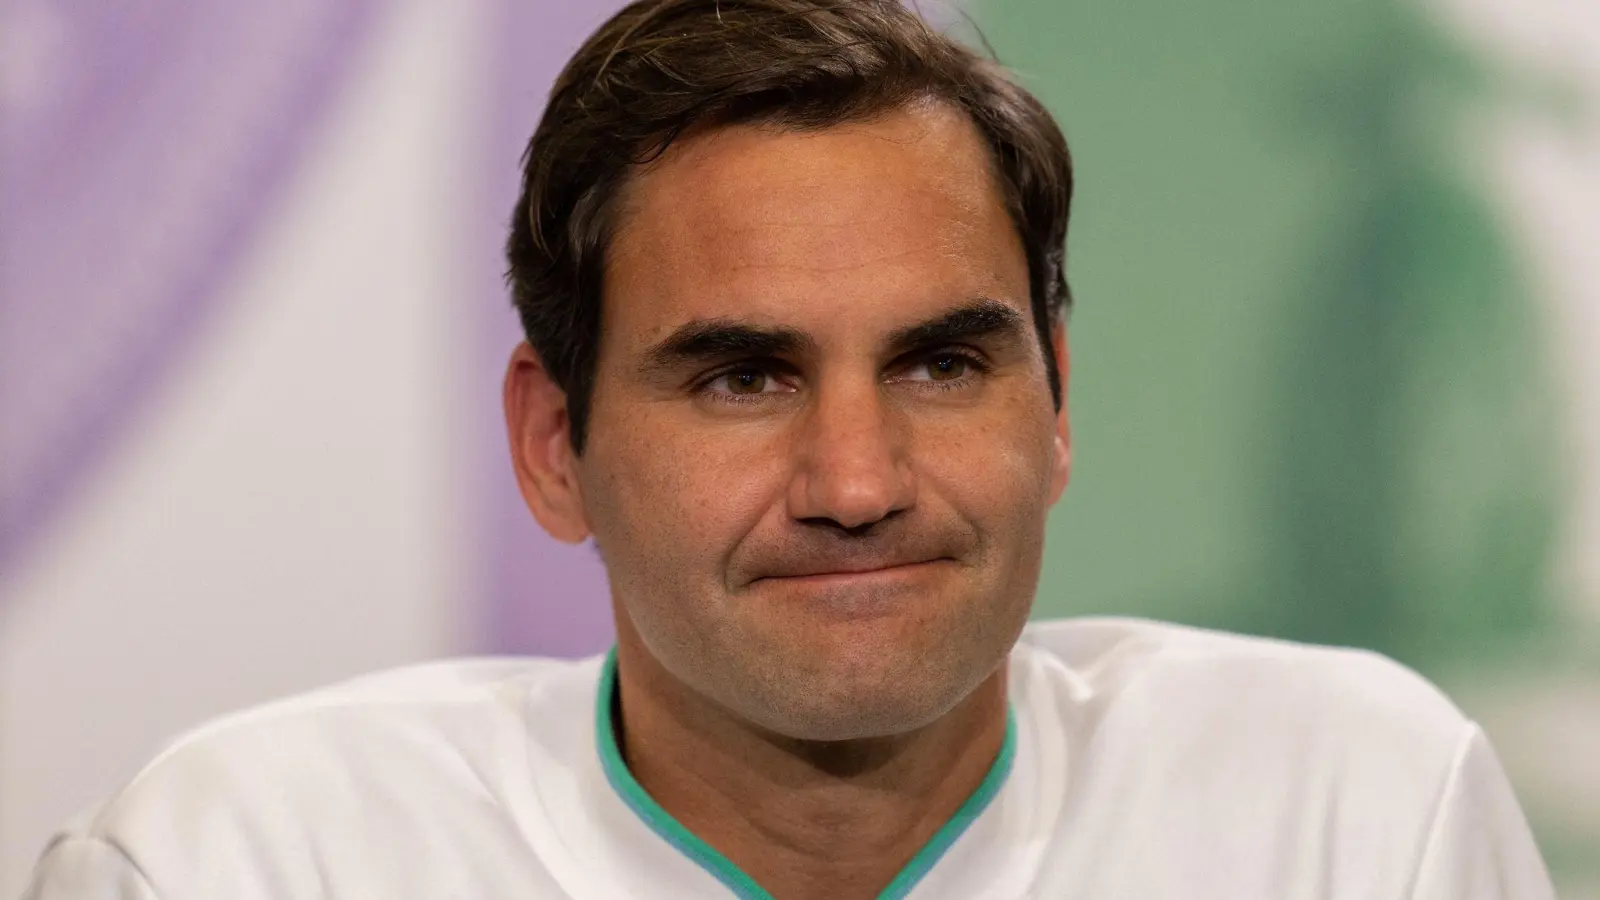 Erklärt seinen Rücktritt vom Profi-Tennis: Roger Federer. (Foto: Joe Toth/Aeltc Pool/PA Wire/dpa)